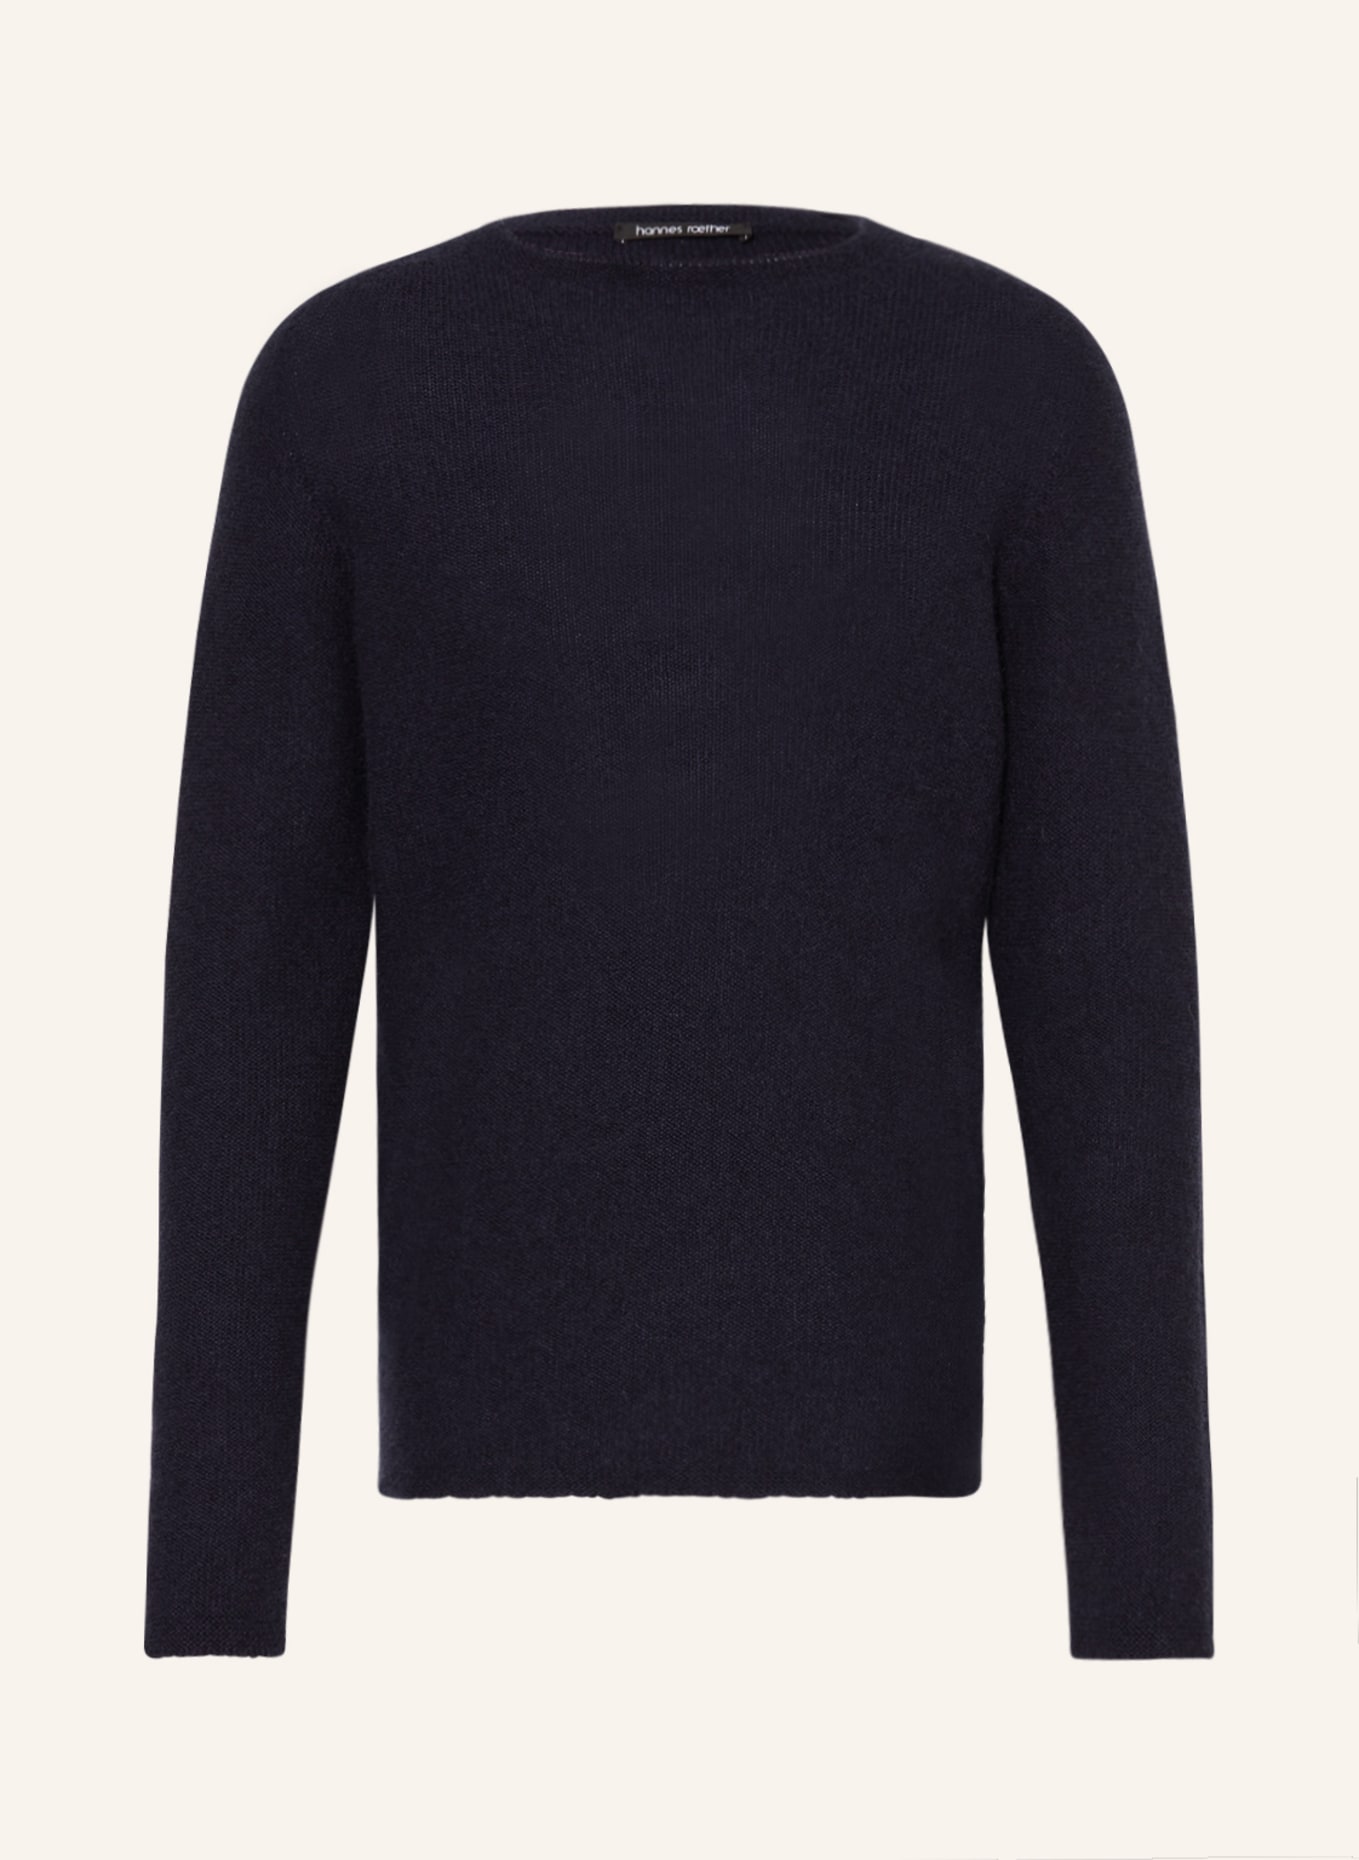 hannes roether Cashmere-Pullover YA10KUZA, Farbe: DUNKELBLAU (Bild 1)